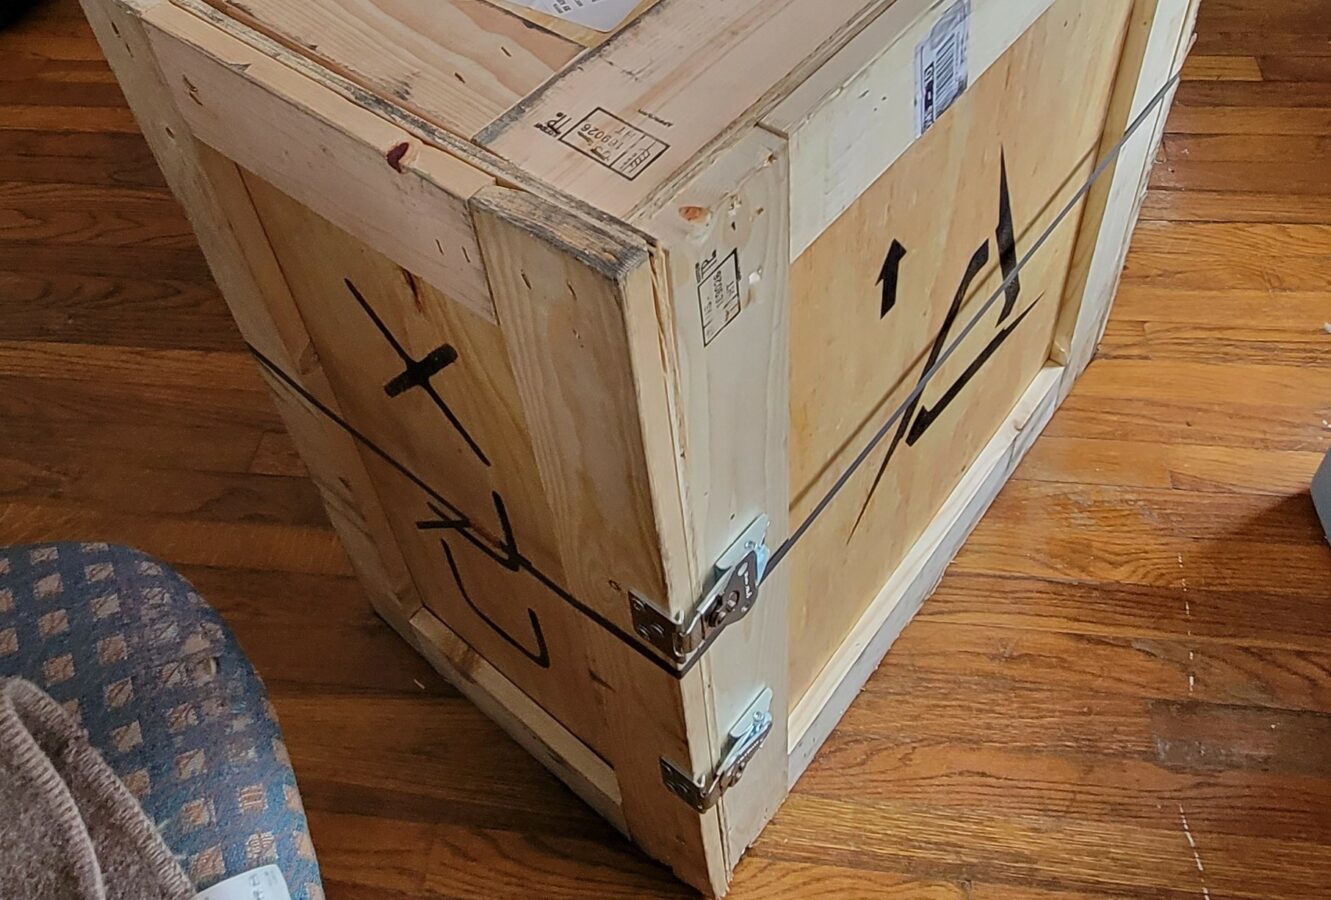 CLX-RA crate UPS